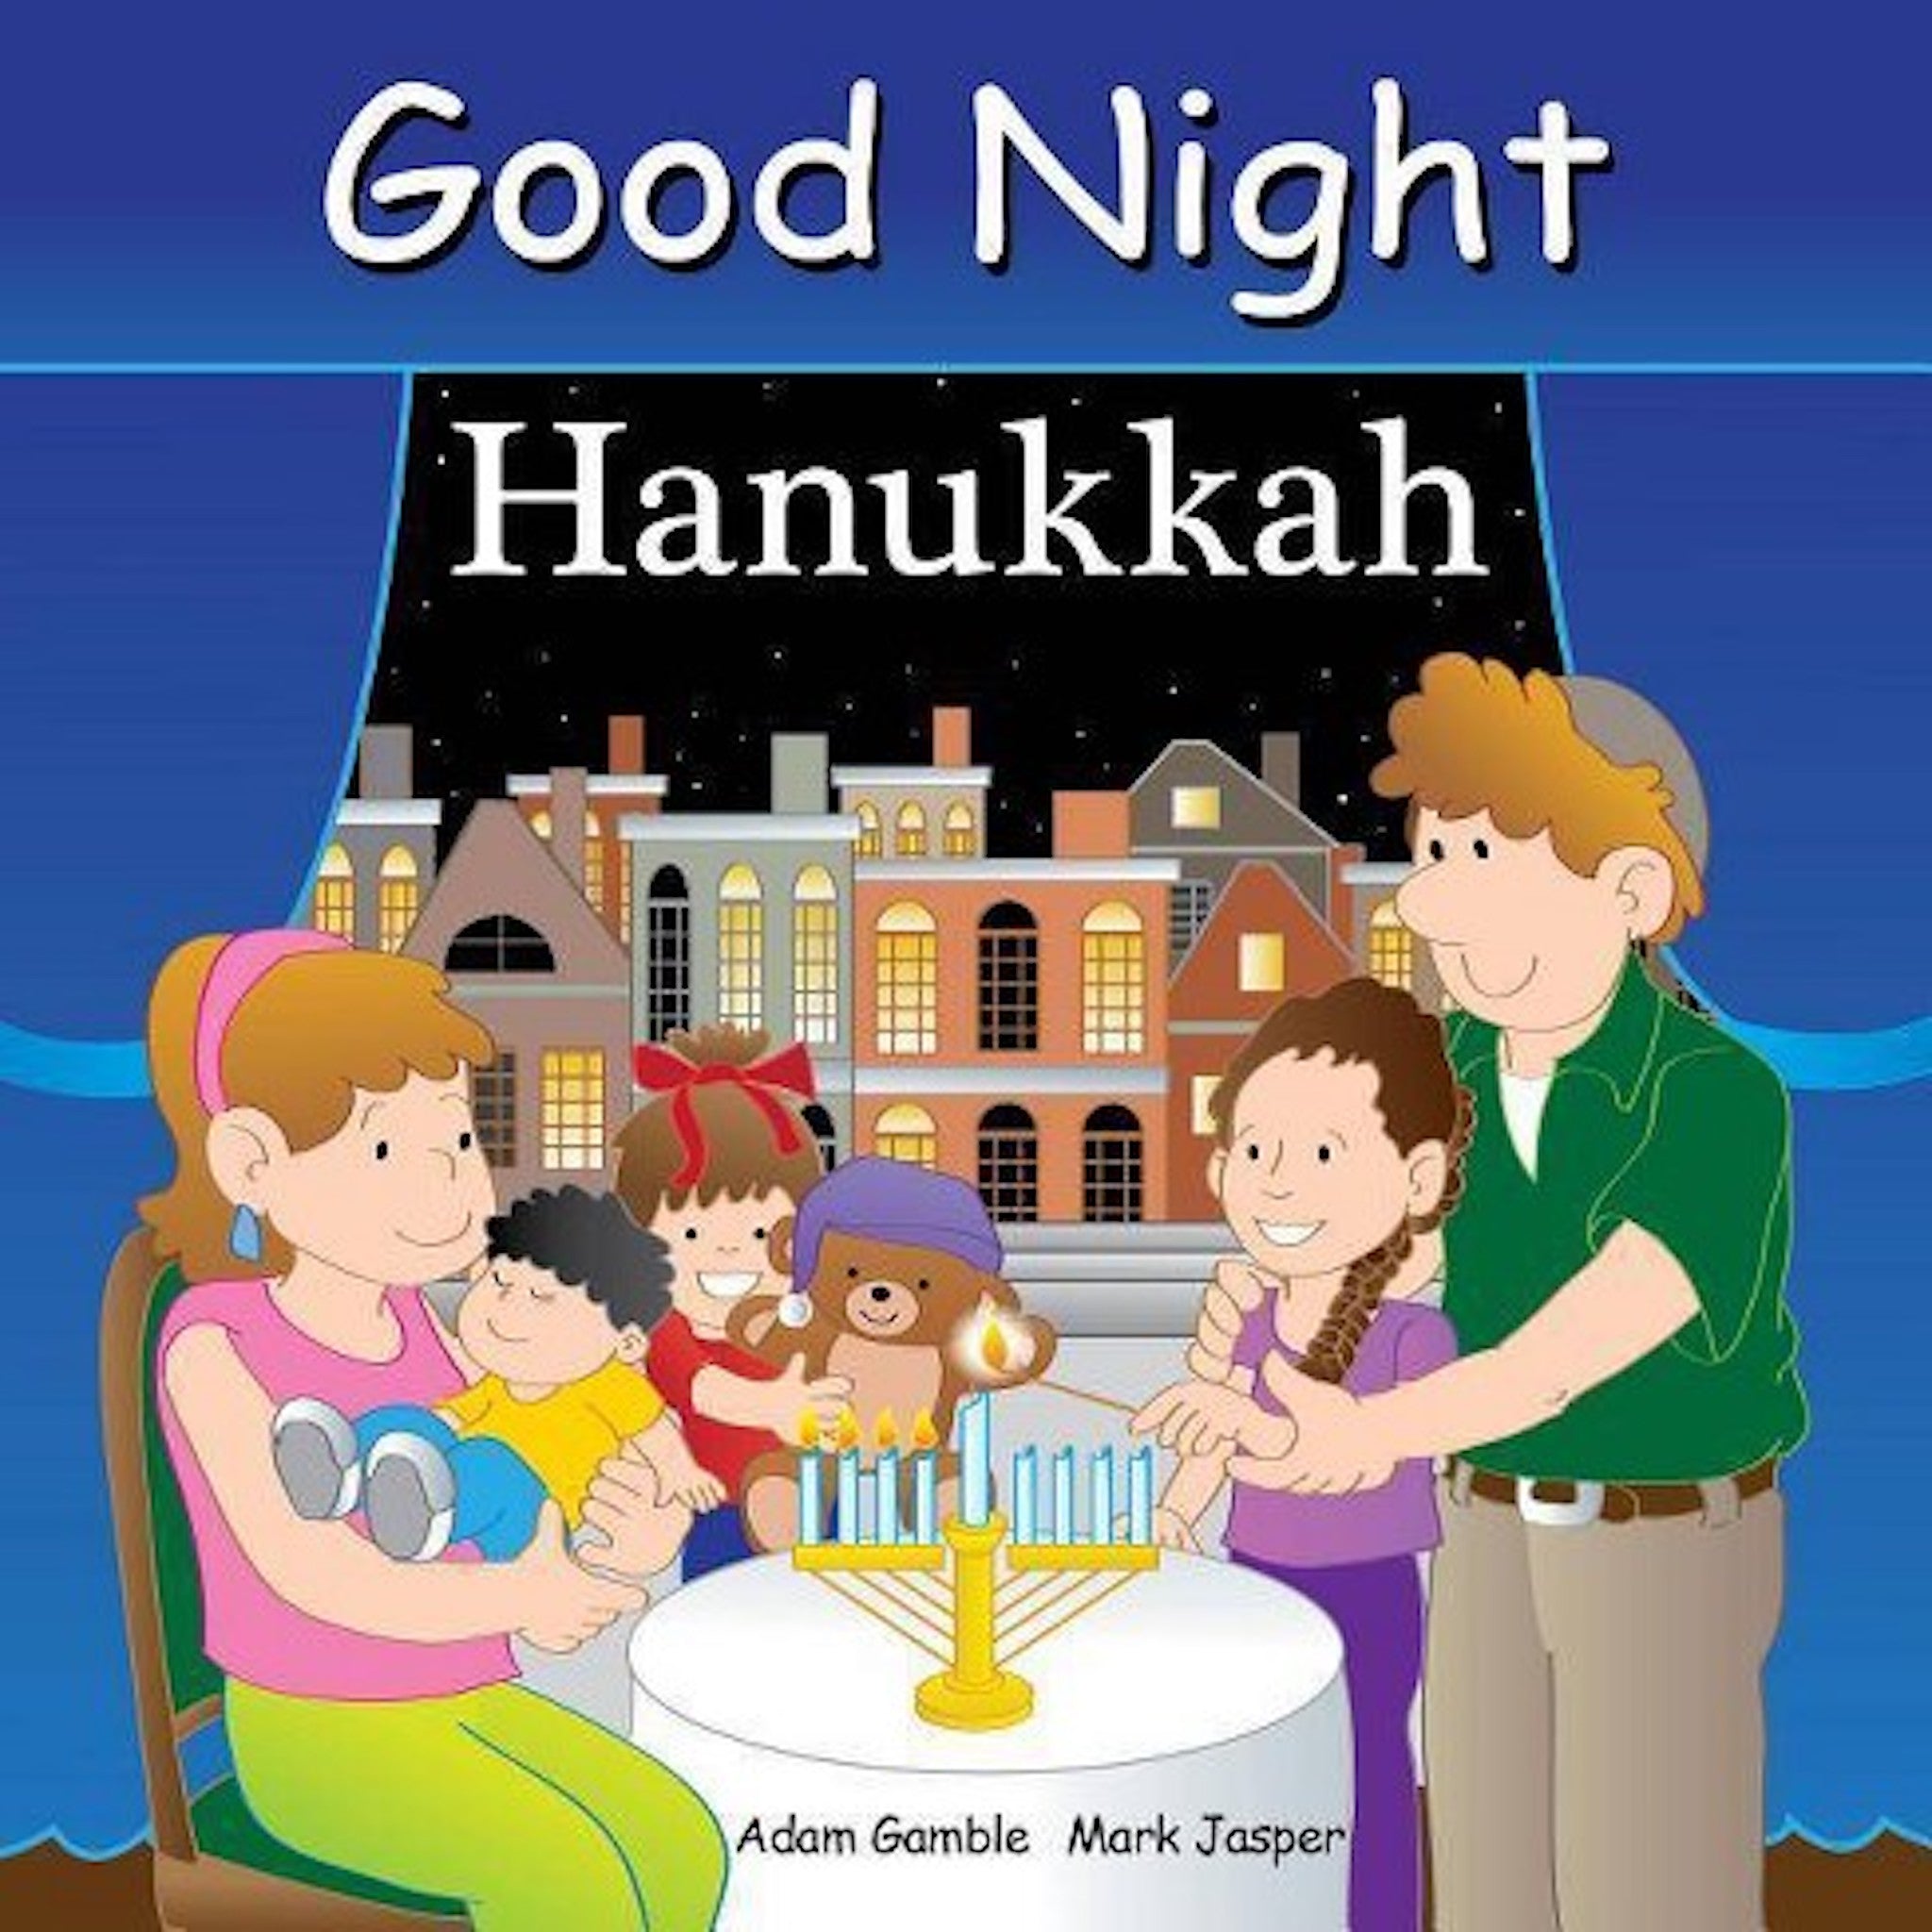 Good Night Hanukkah written by Adam Gambler and illustrated by Mark Jasper